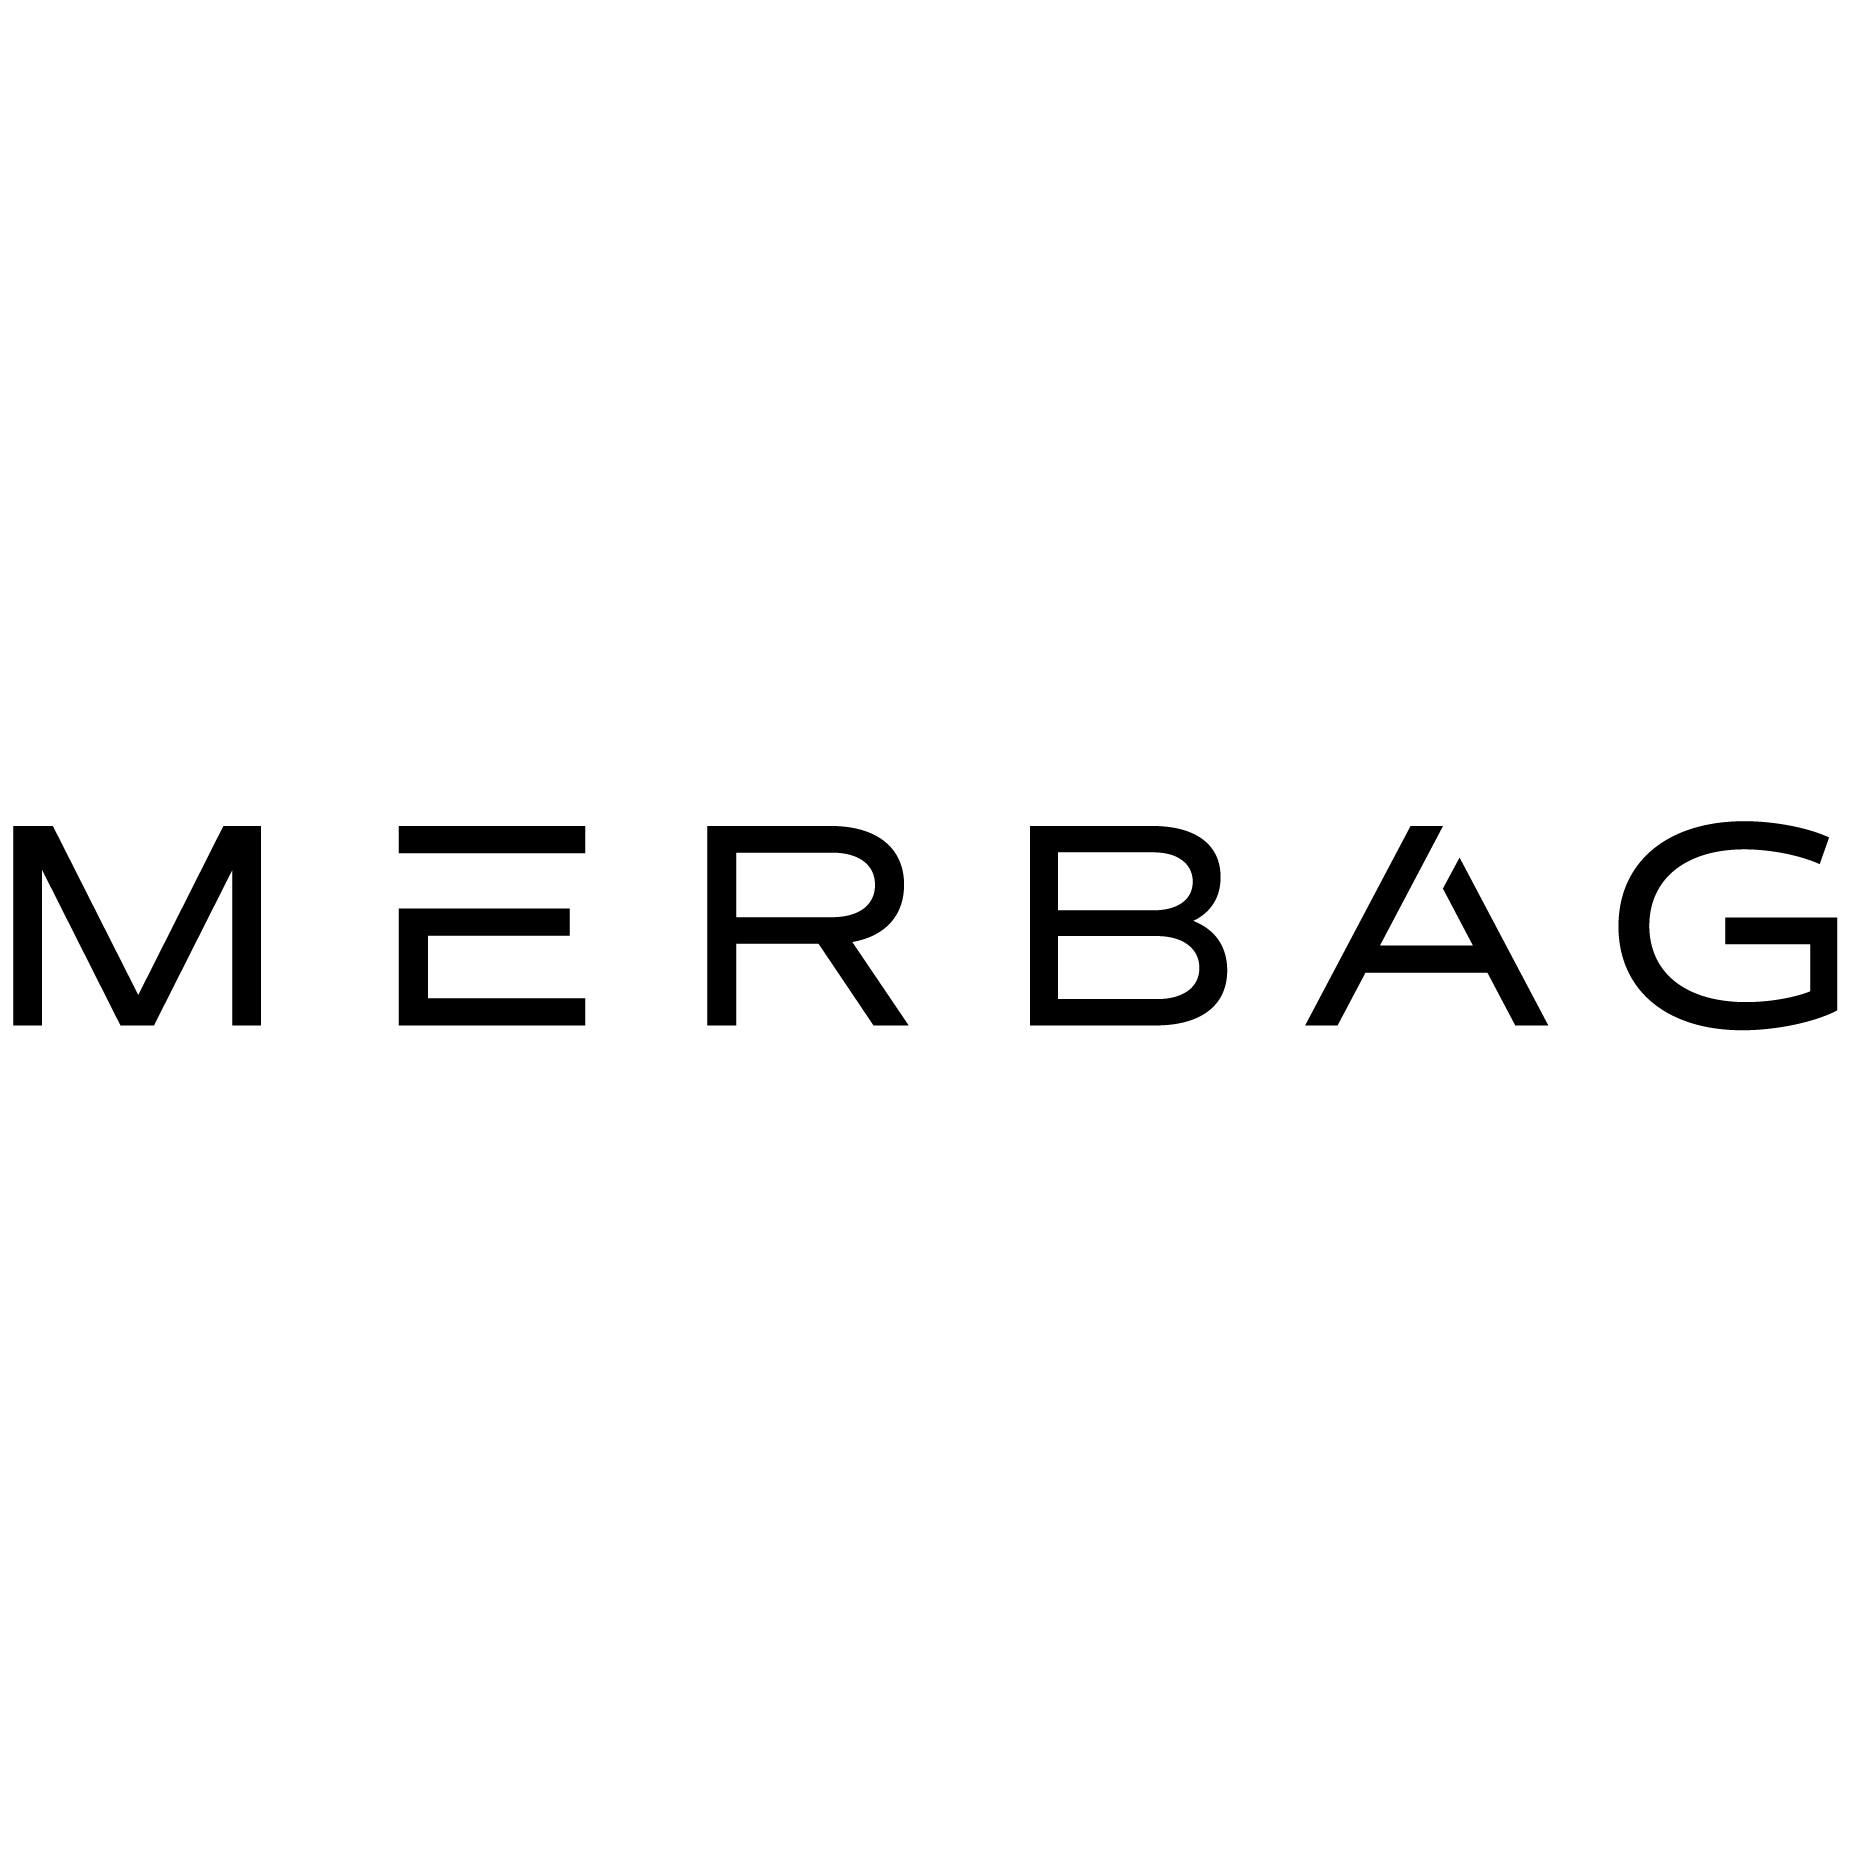 Mercedes-Benz Merbag Bitburg in Bitburg - Logo